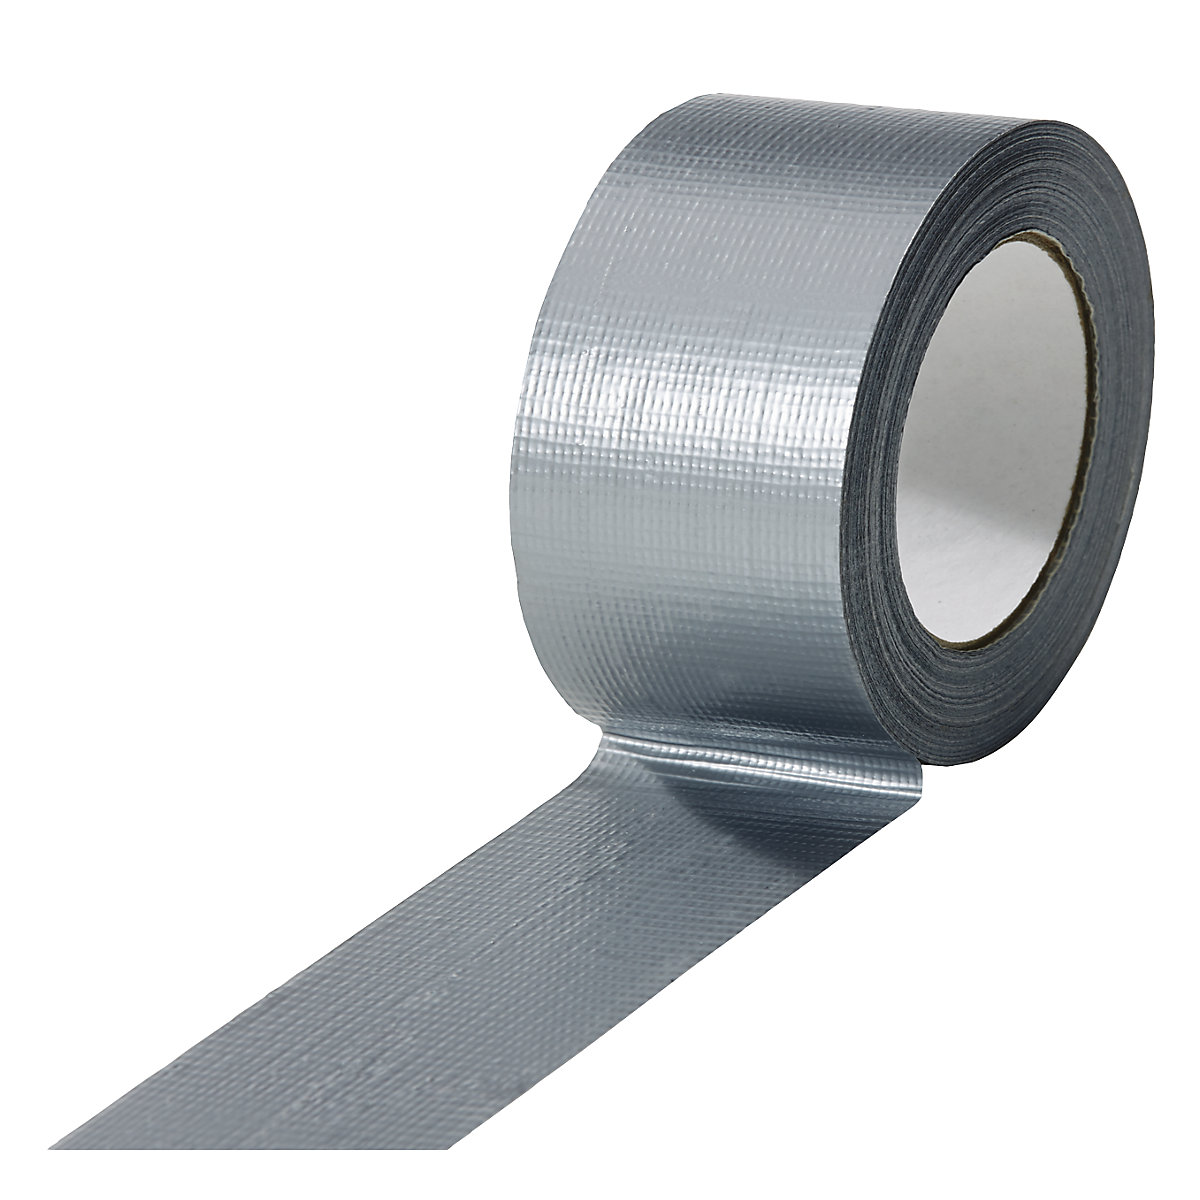 Tkaninová páska, v různých barvách, bal.j. 18 rolí, stříbrná, šířka pásky 50 mm-10